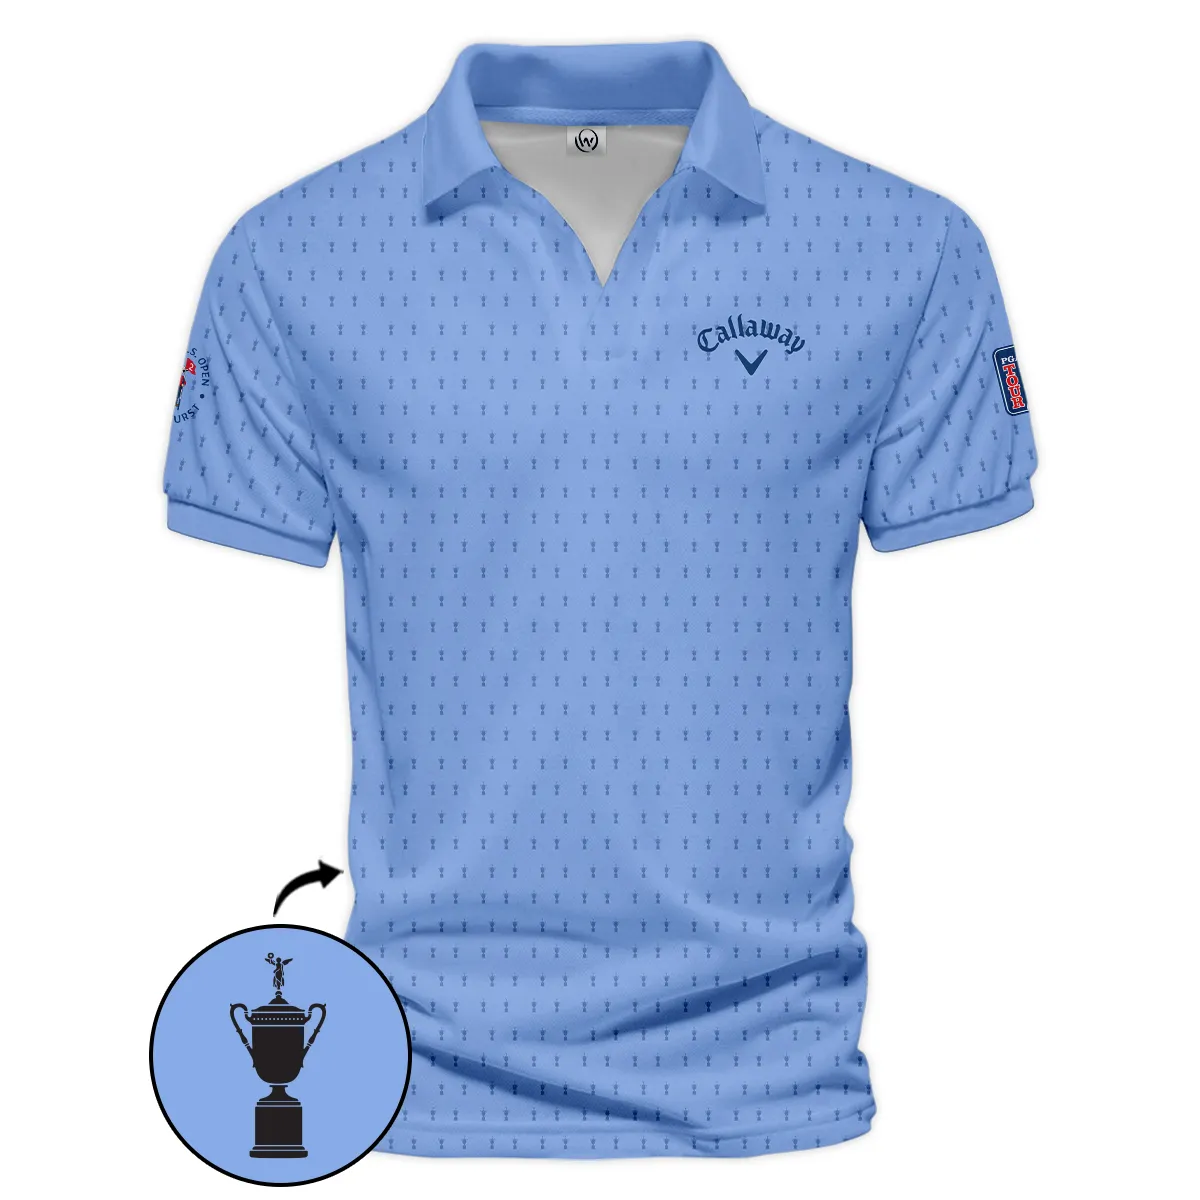 Golf Pattern Cup Blue 124th U.S. Open Pinehurst Pinehurst Callaway Zipper Polo Shirt Style Classic